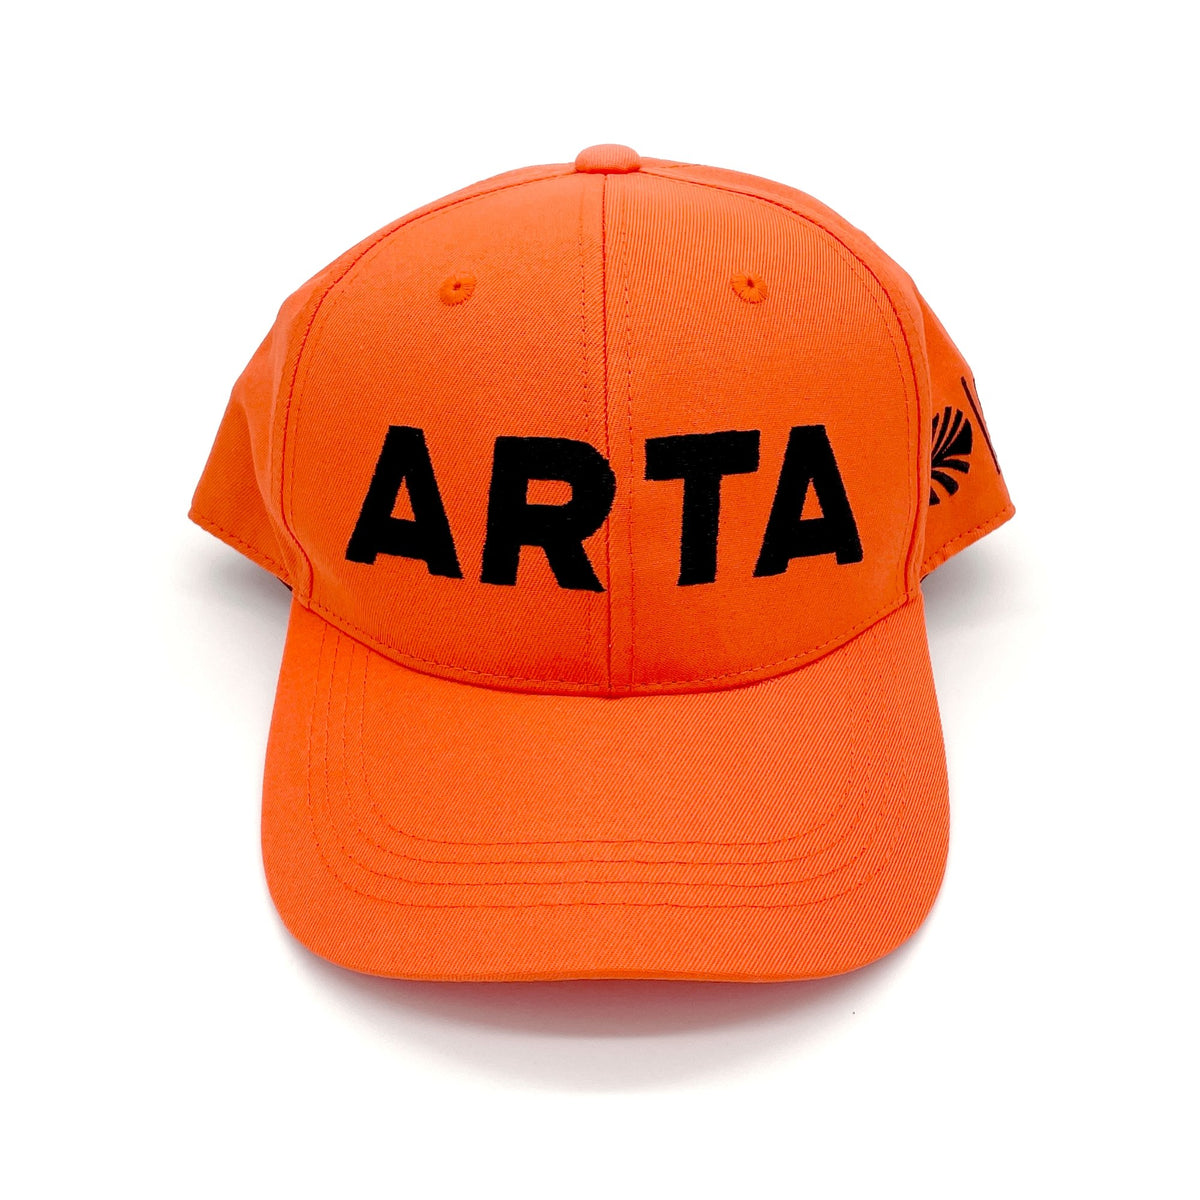 Genuine Promotional Japan Autobacs Racing ARTA Cap Hat Kids Size - Sugoi JDM